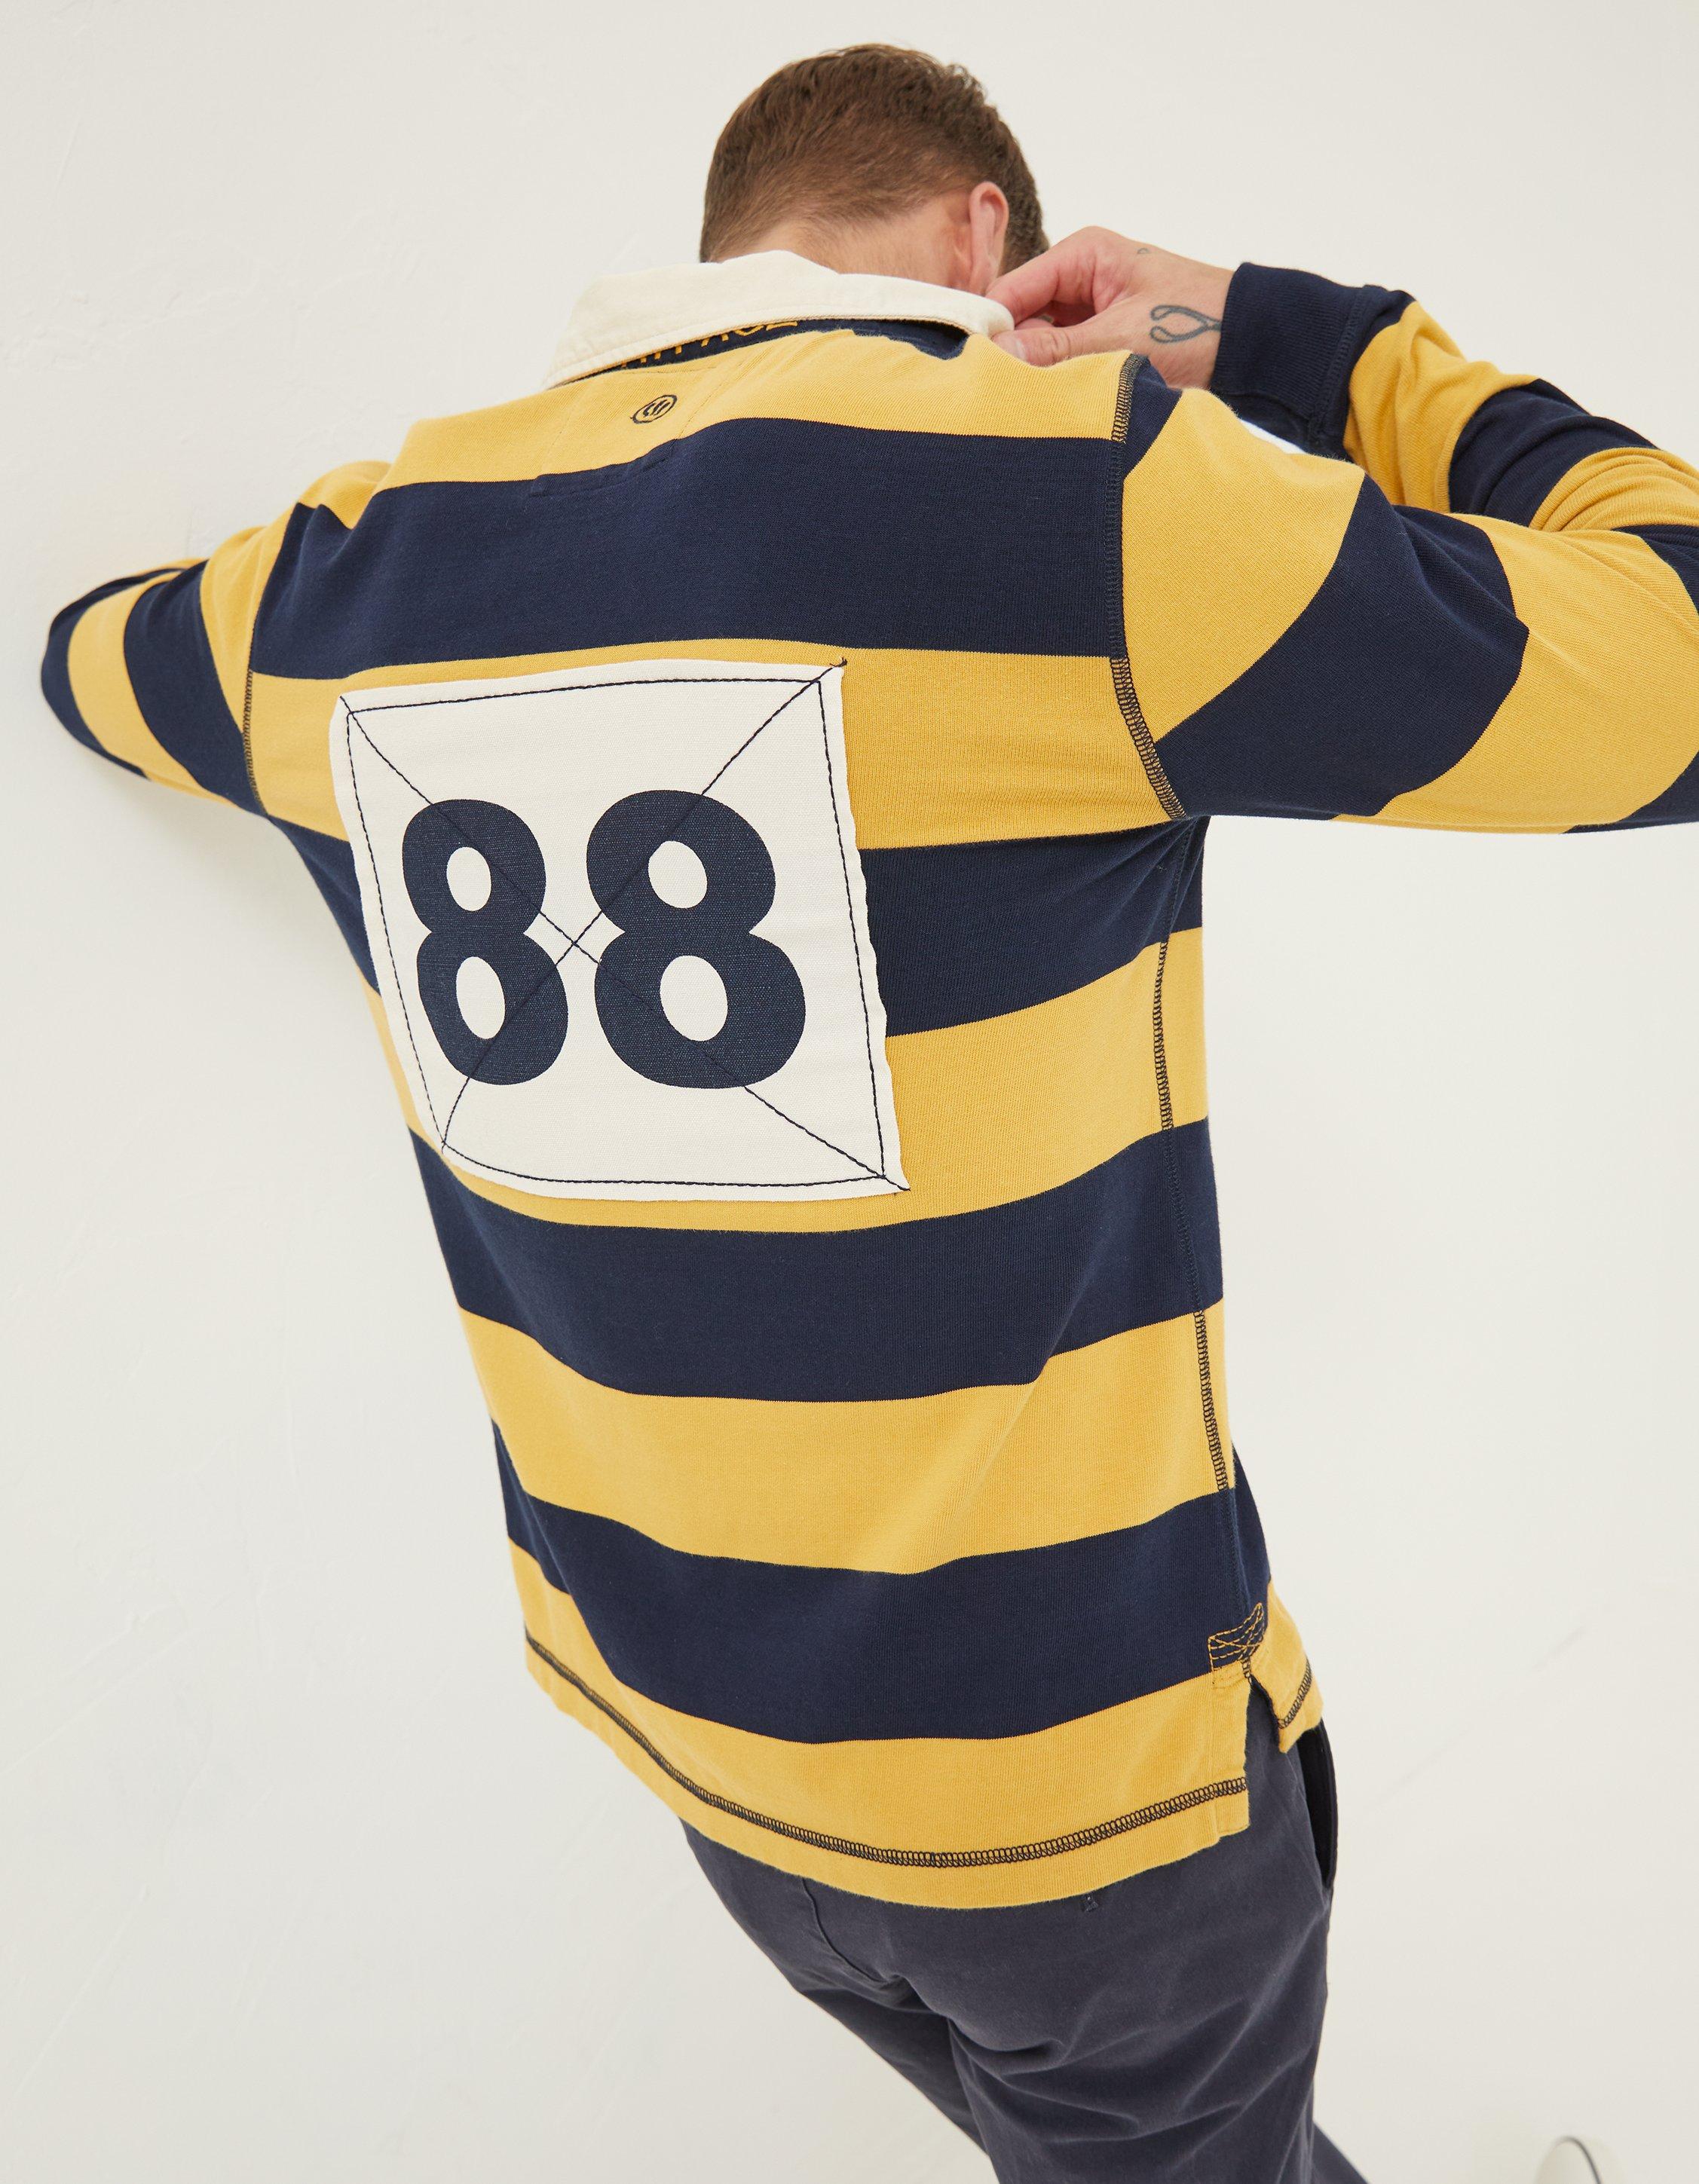 Block Stripe 88 Rugby Shirt